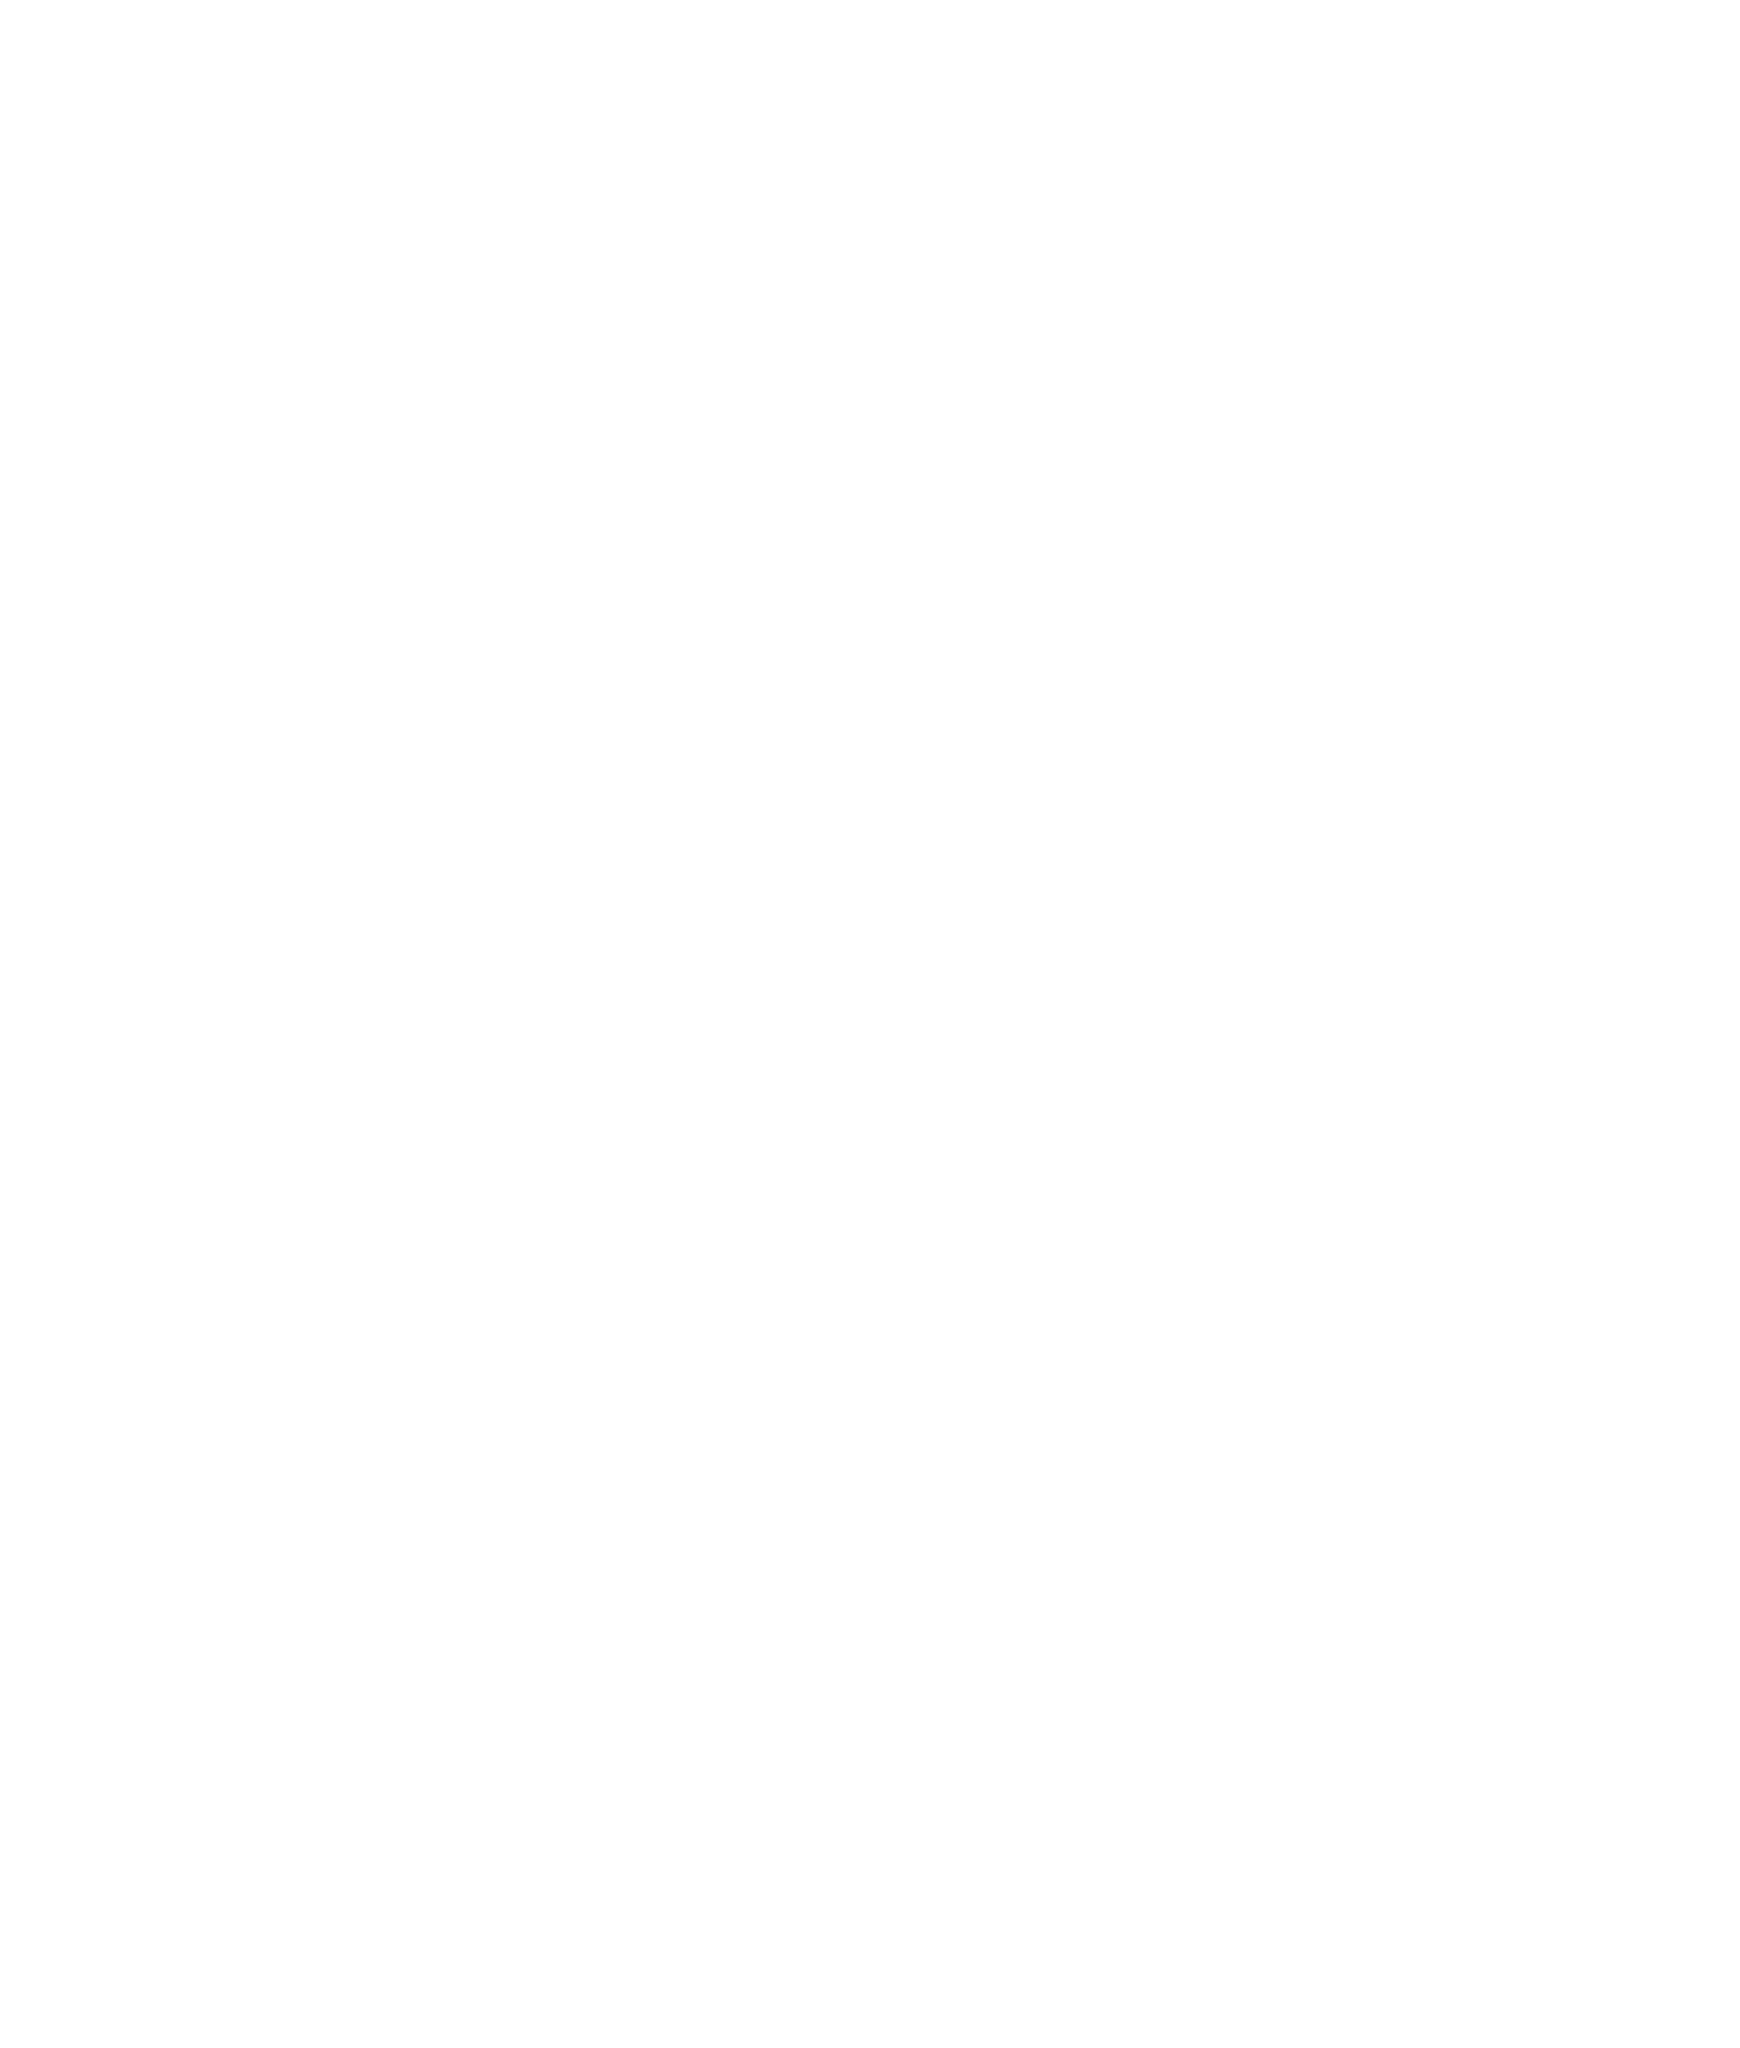 stethoscope icon